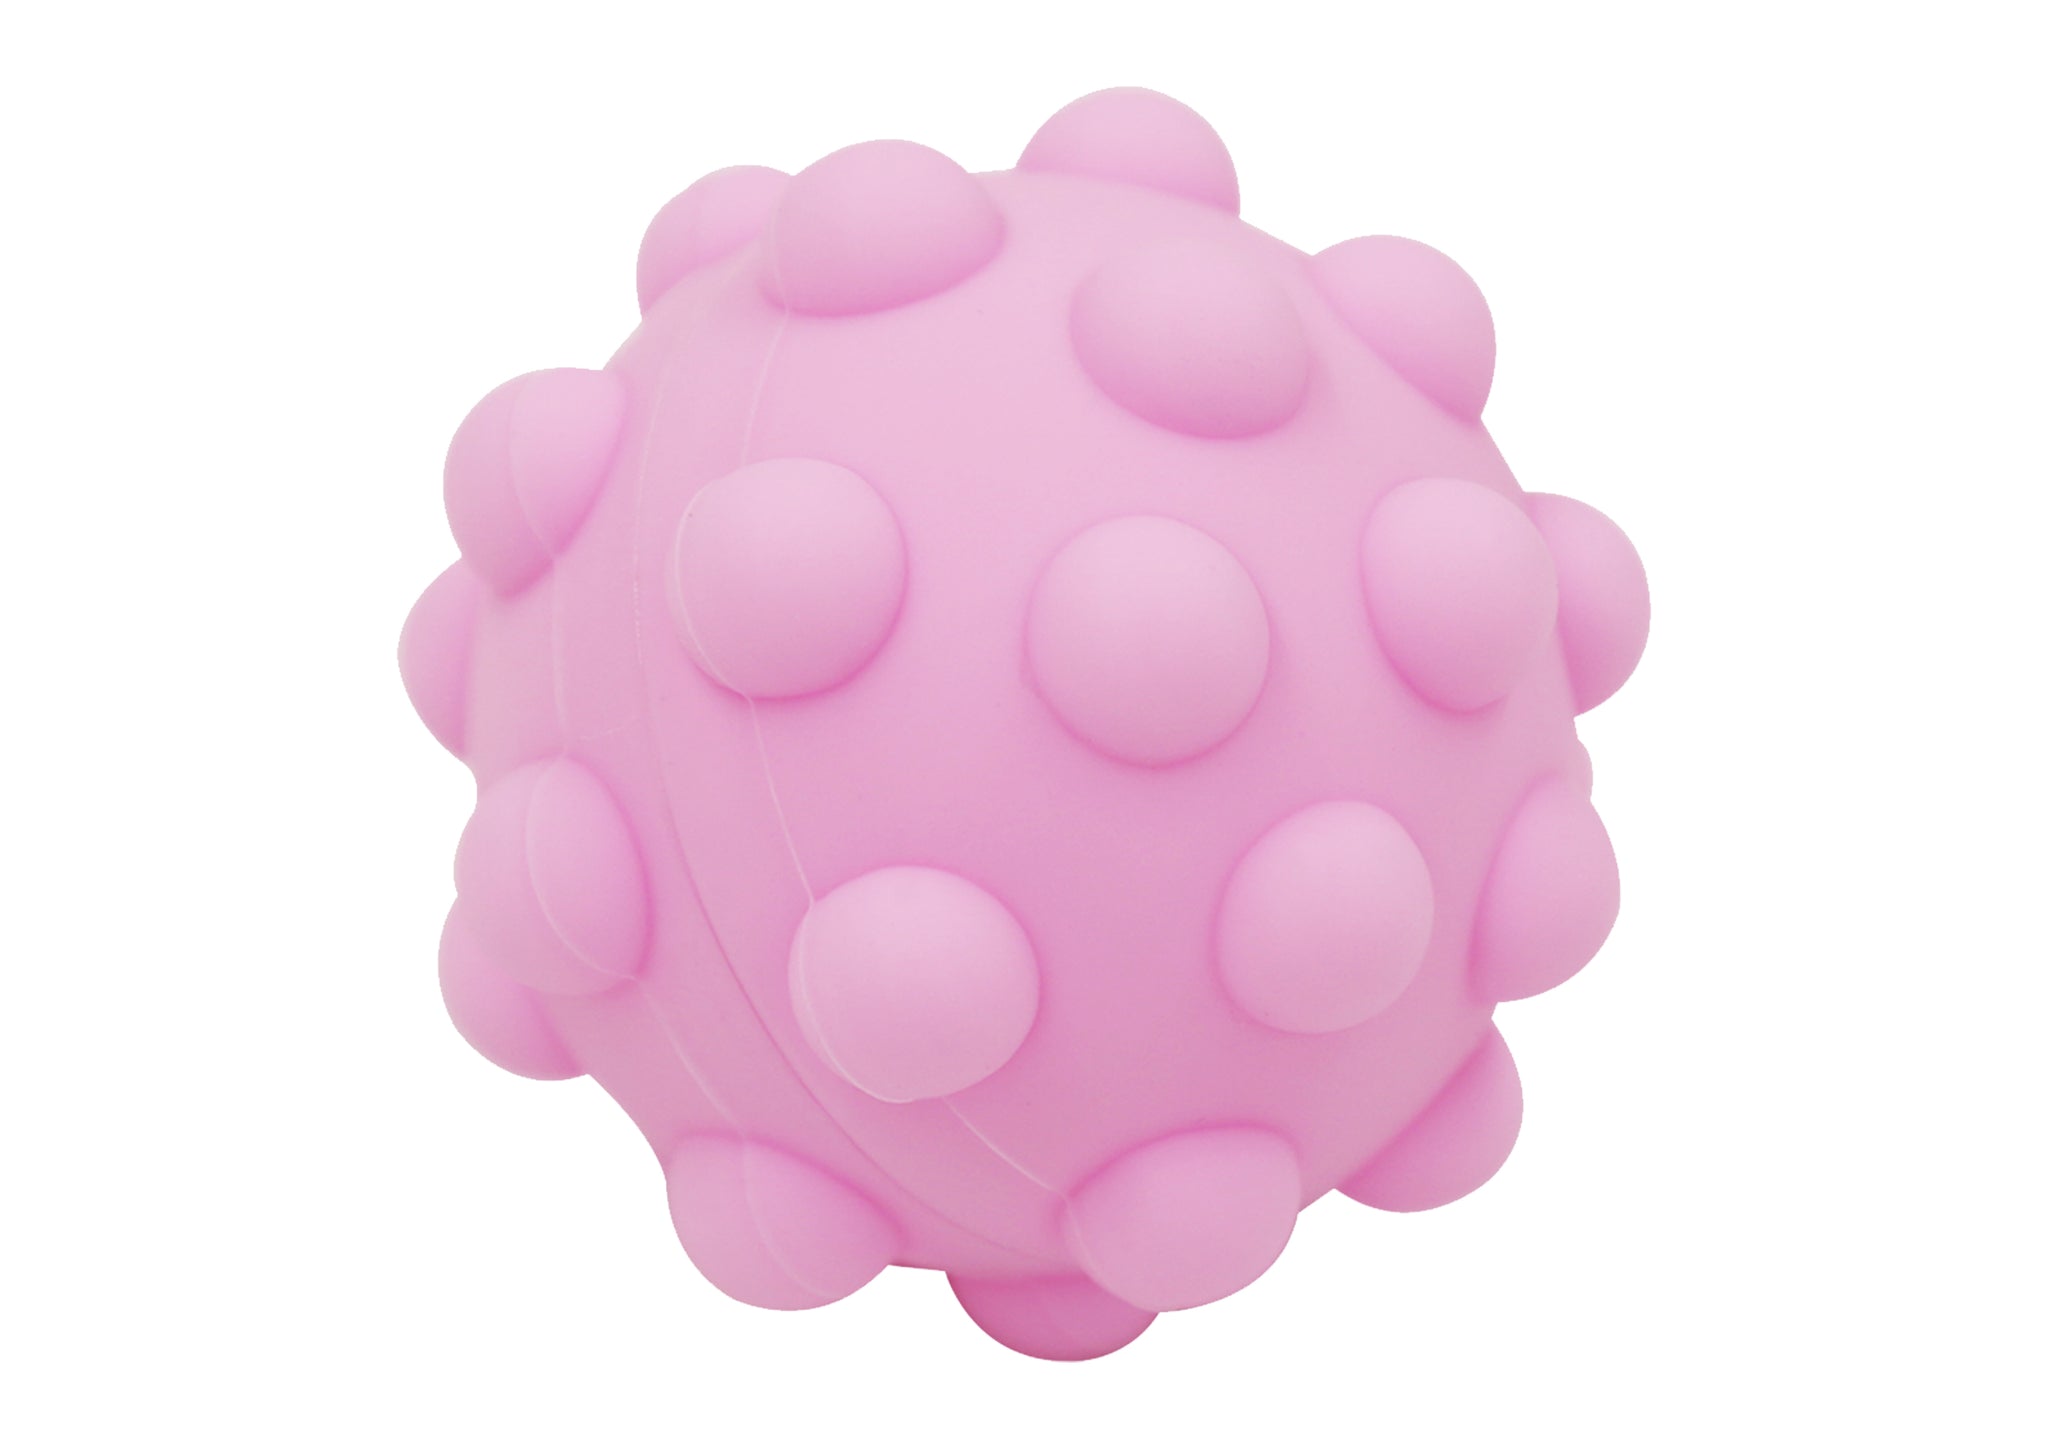 Pop It Ball Fidget Toy - Mint/Pink